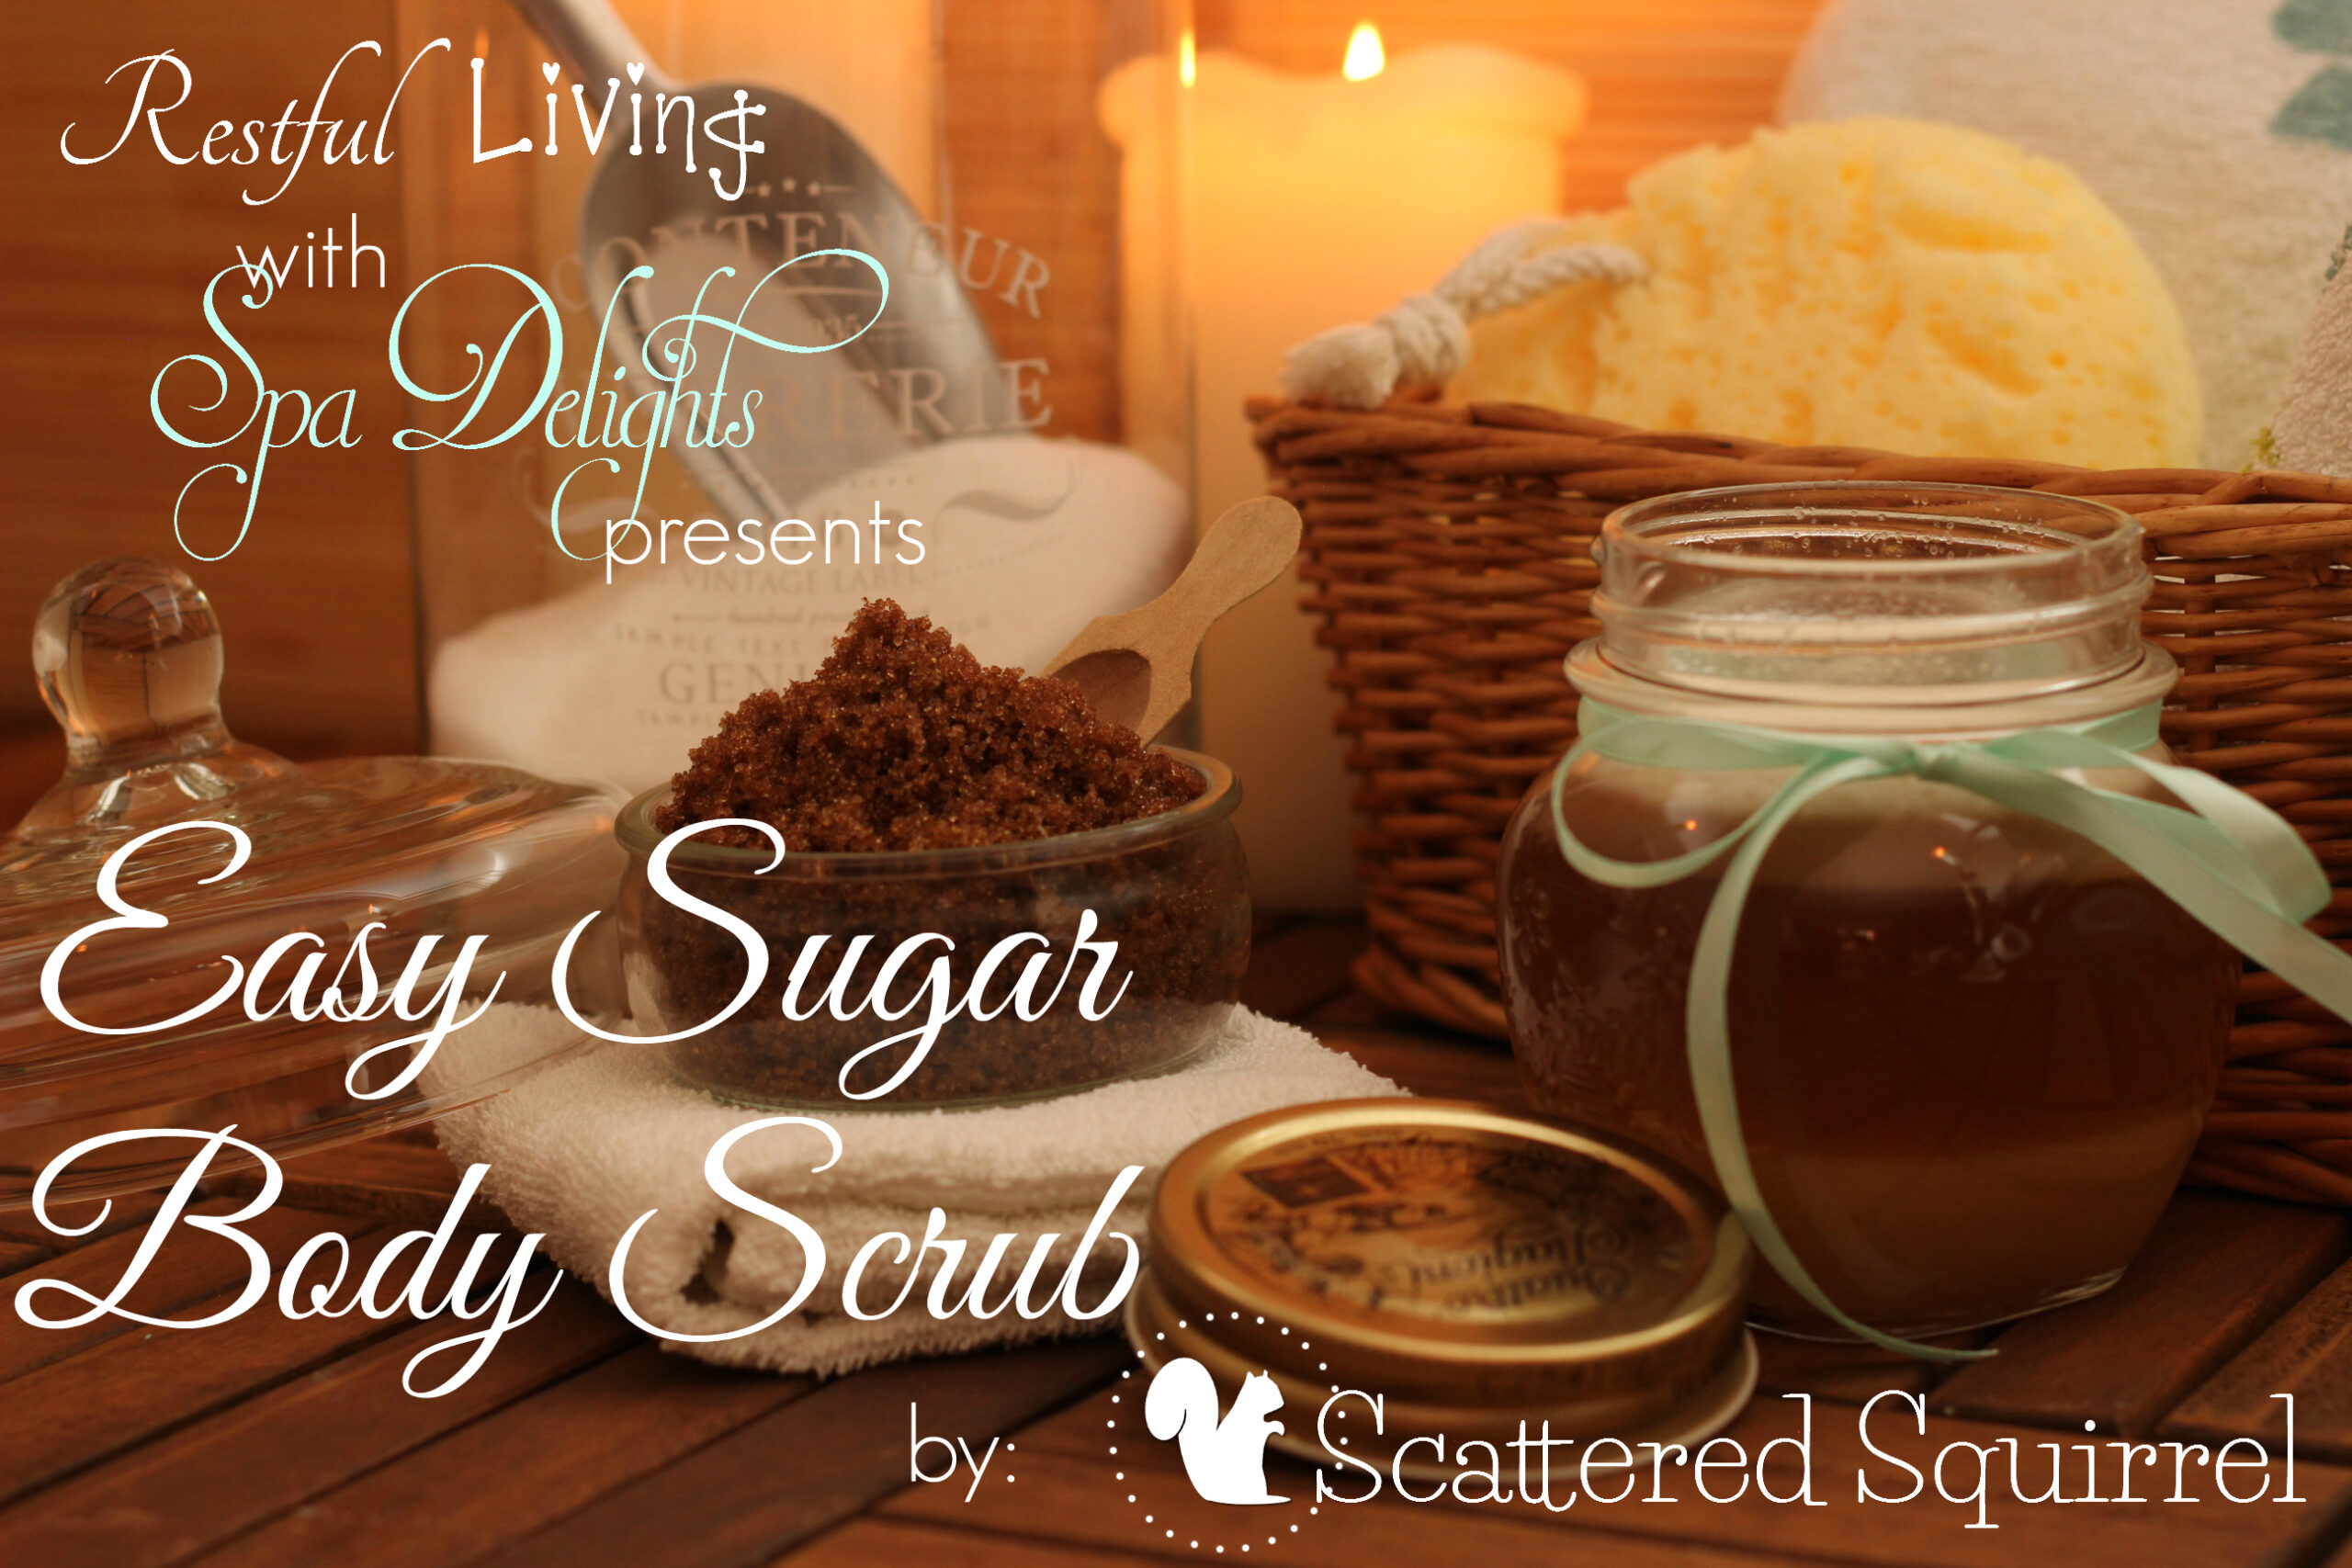 Easy Sugar Body Scrub {Guest Posting at Restful Living}